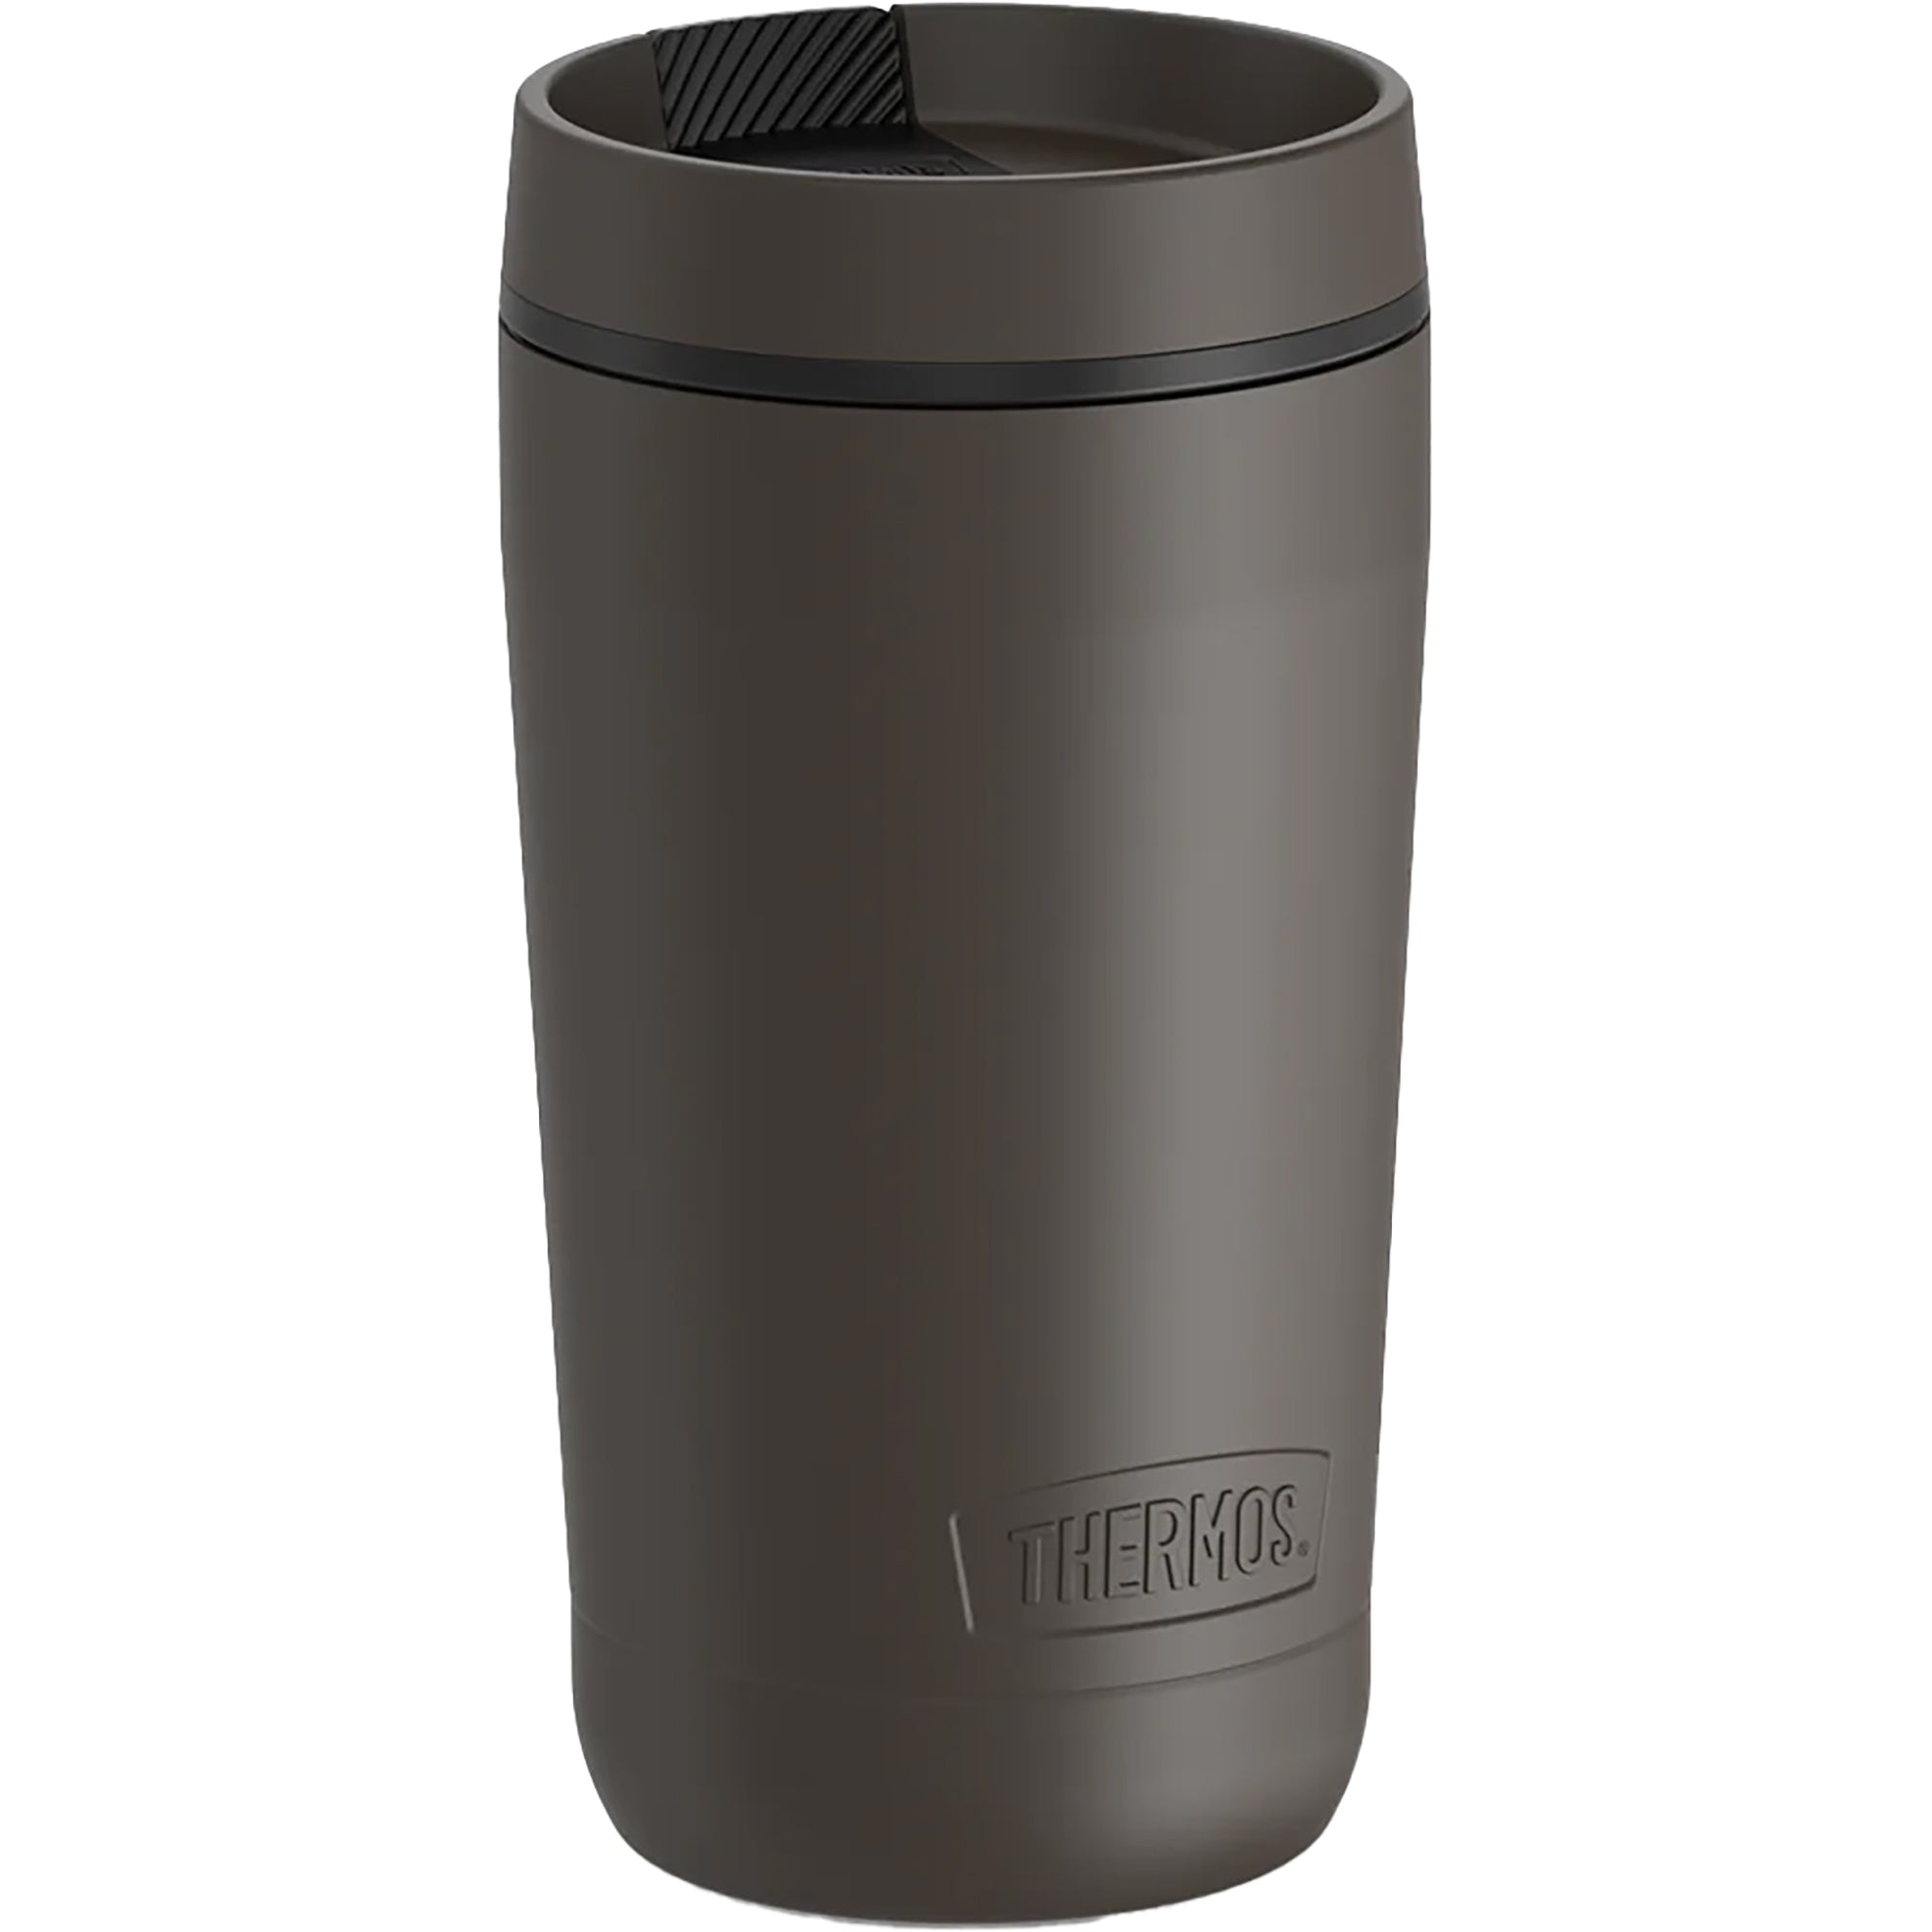 Thermos 12 oz. Alta Vacuum Insulated Stainless Steel Tumbler - Espresso Black Thermos